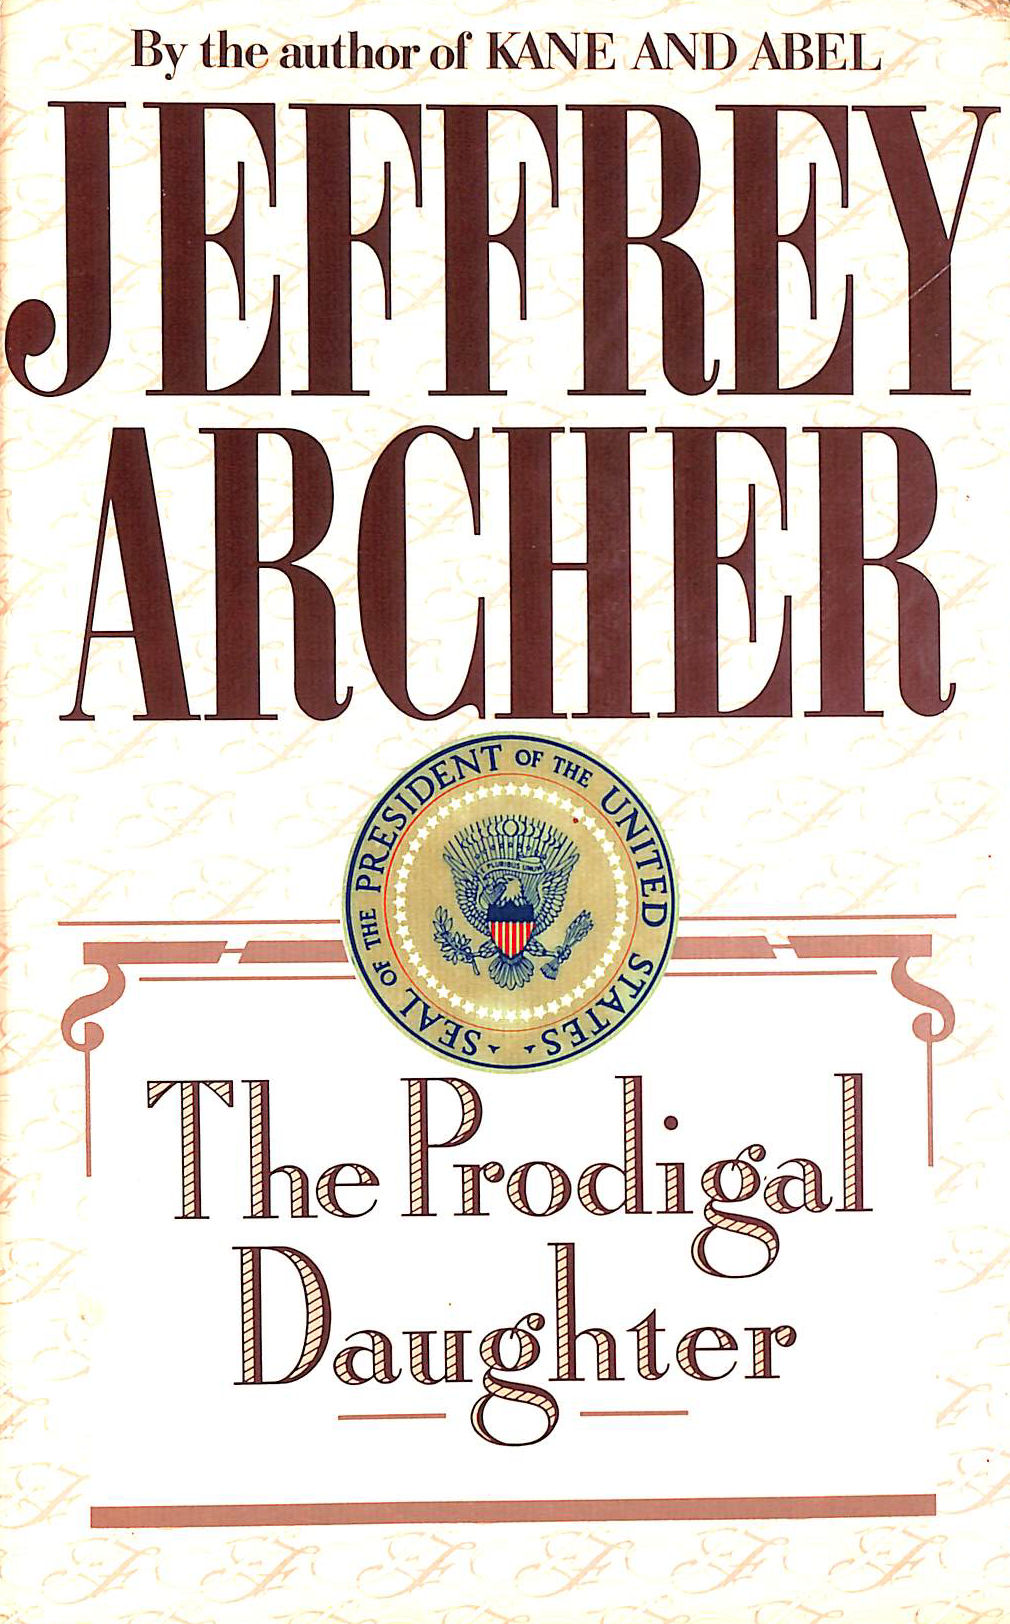 ARCHER, JEFFREY - The Prodigal Daughter